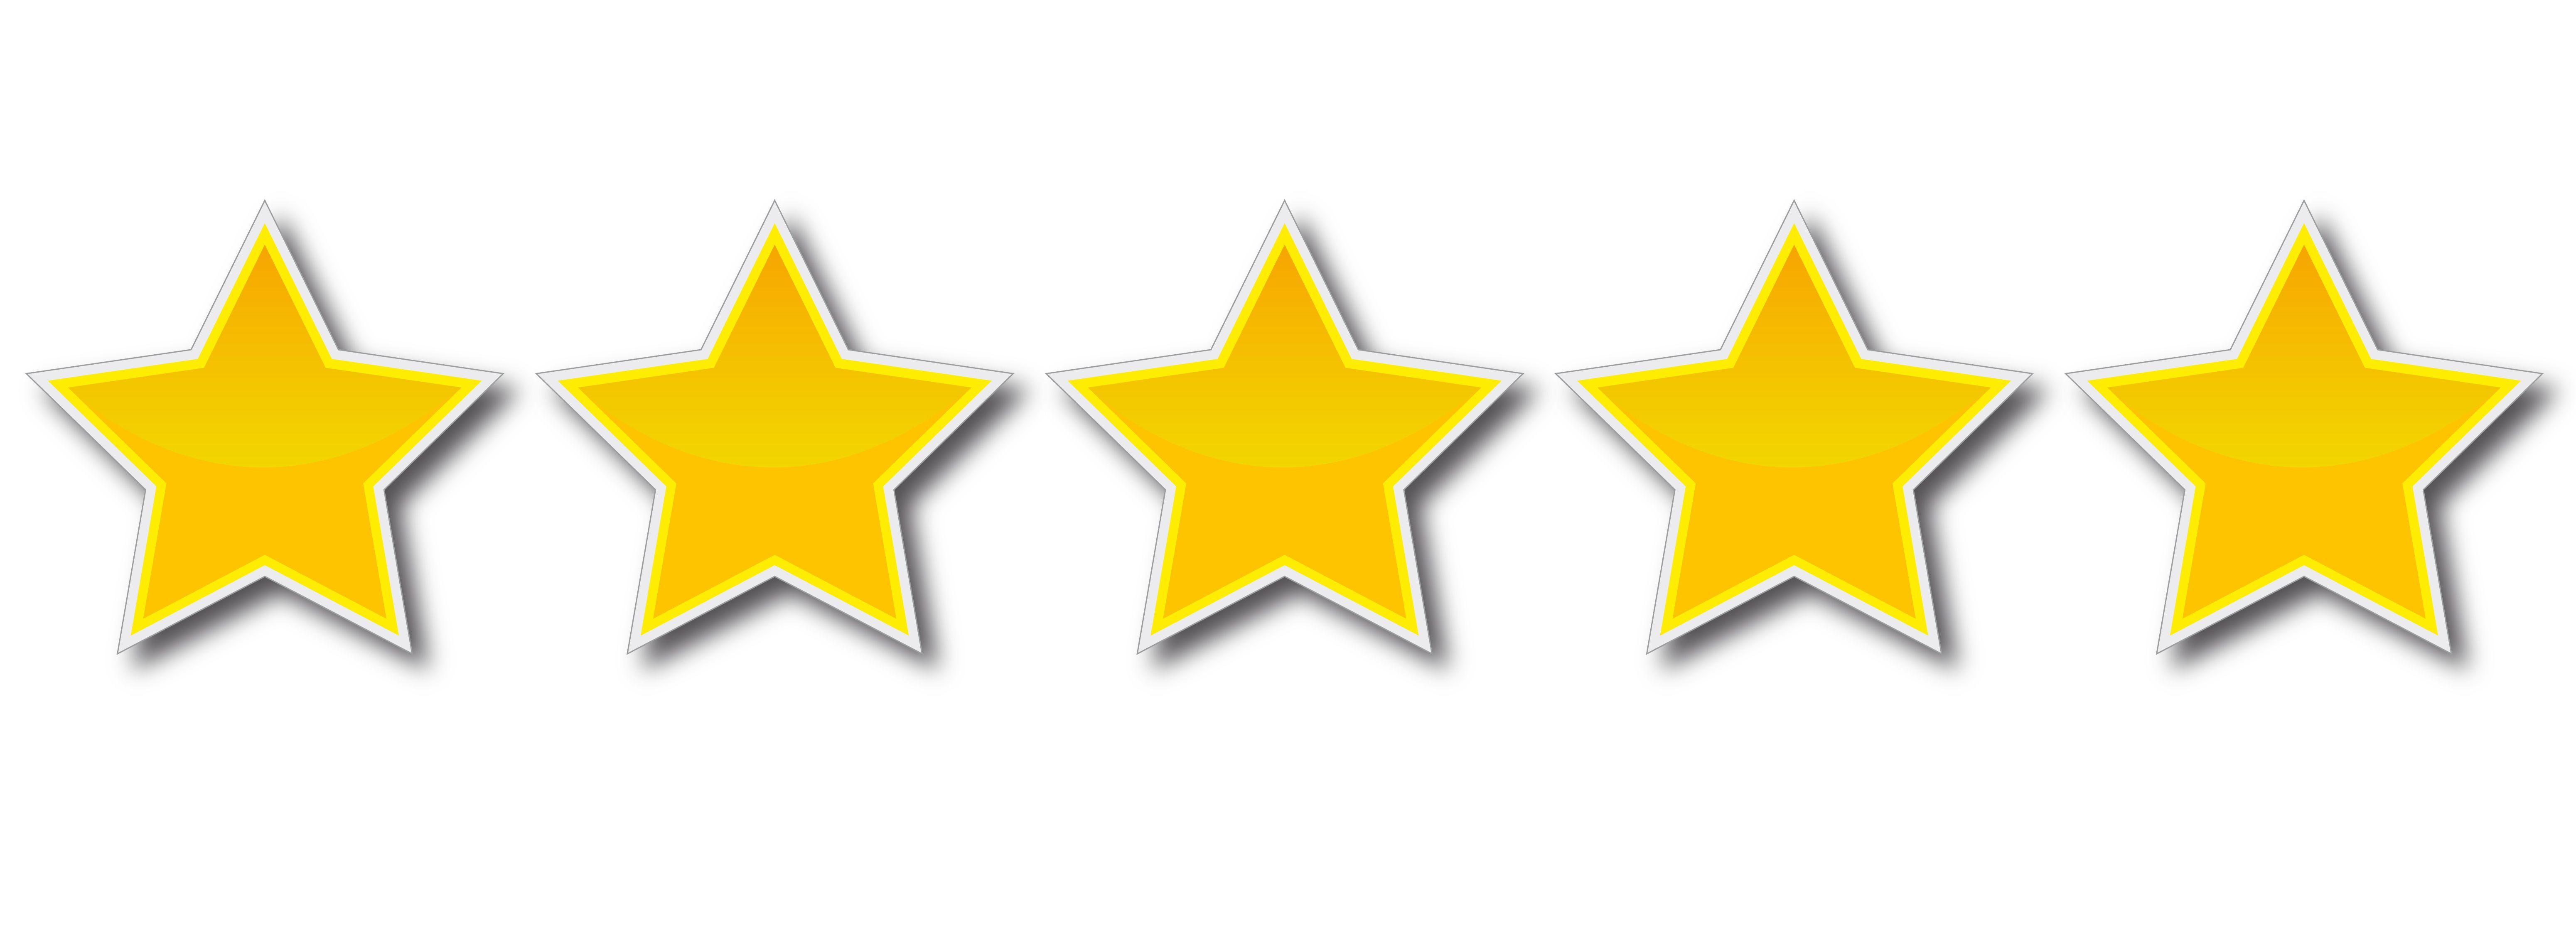 Review Stars Logo - Hospital Star Ratings - A Game Changer? - Emerging Nurse Leader